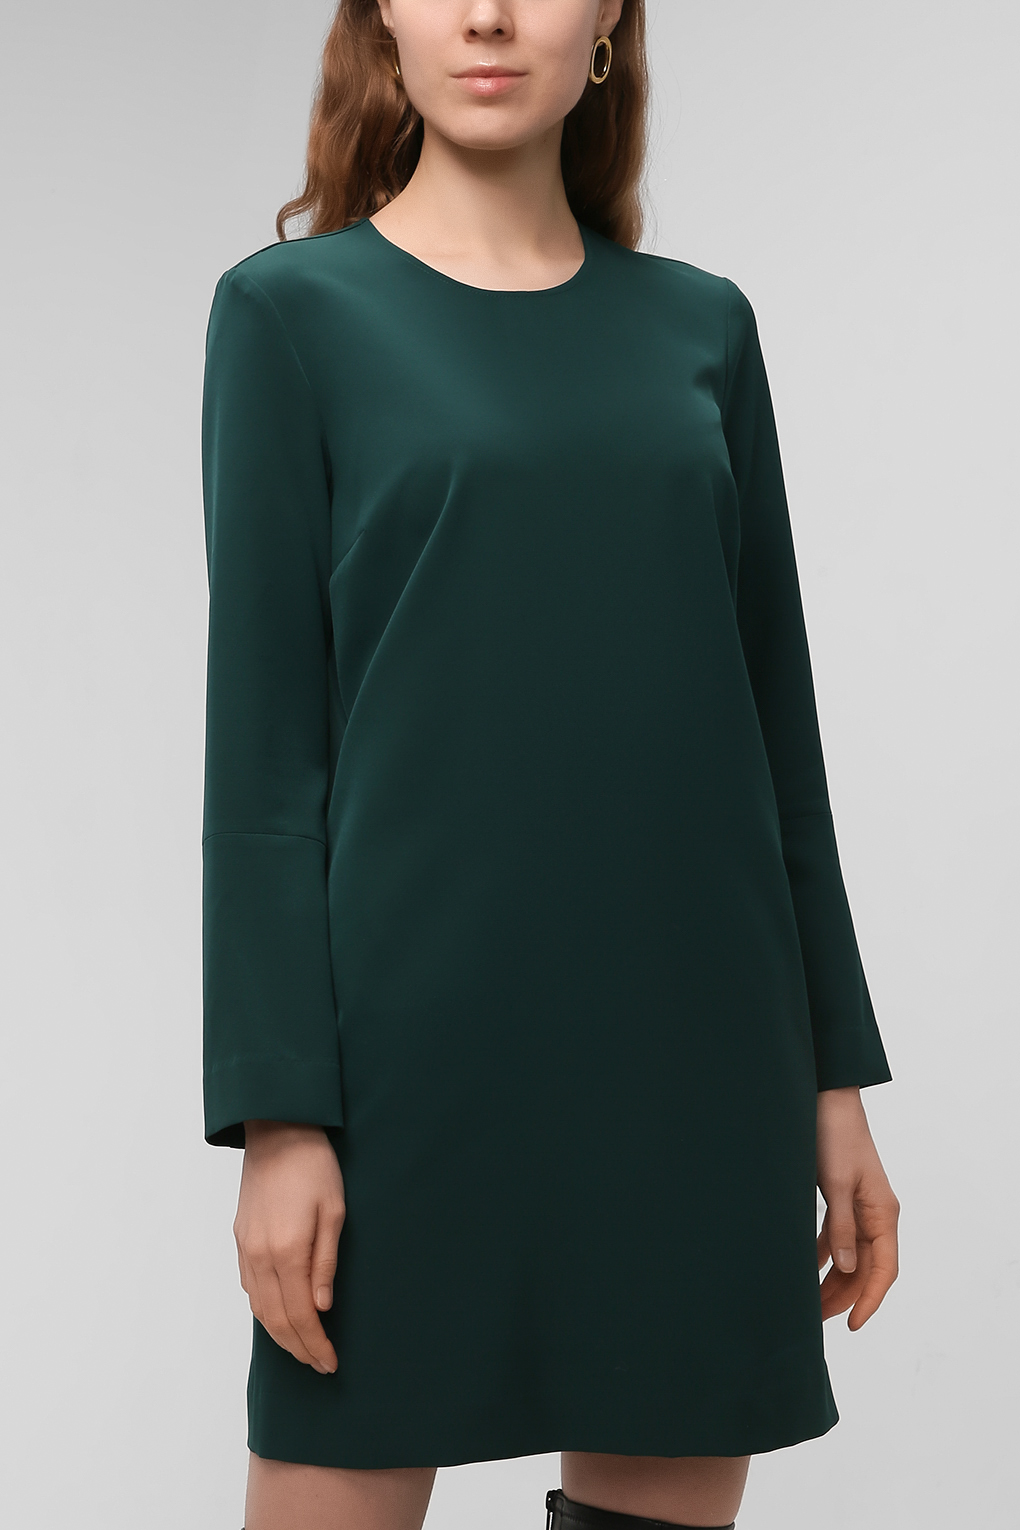 Платье женское PAOLA RAY PR221-3069 зеленое M